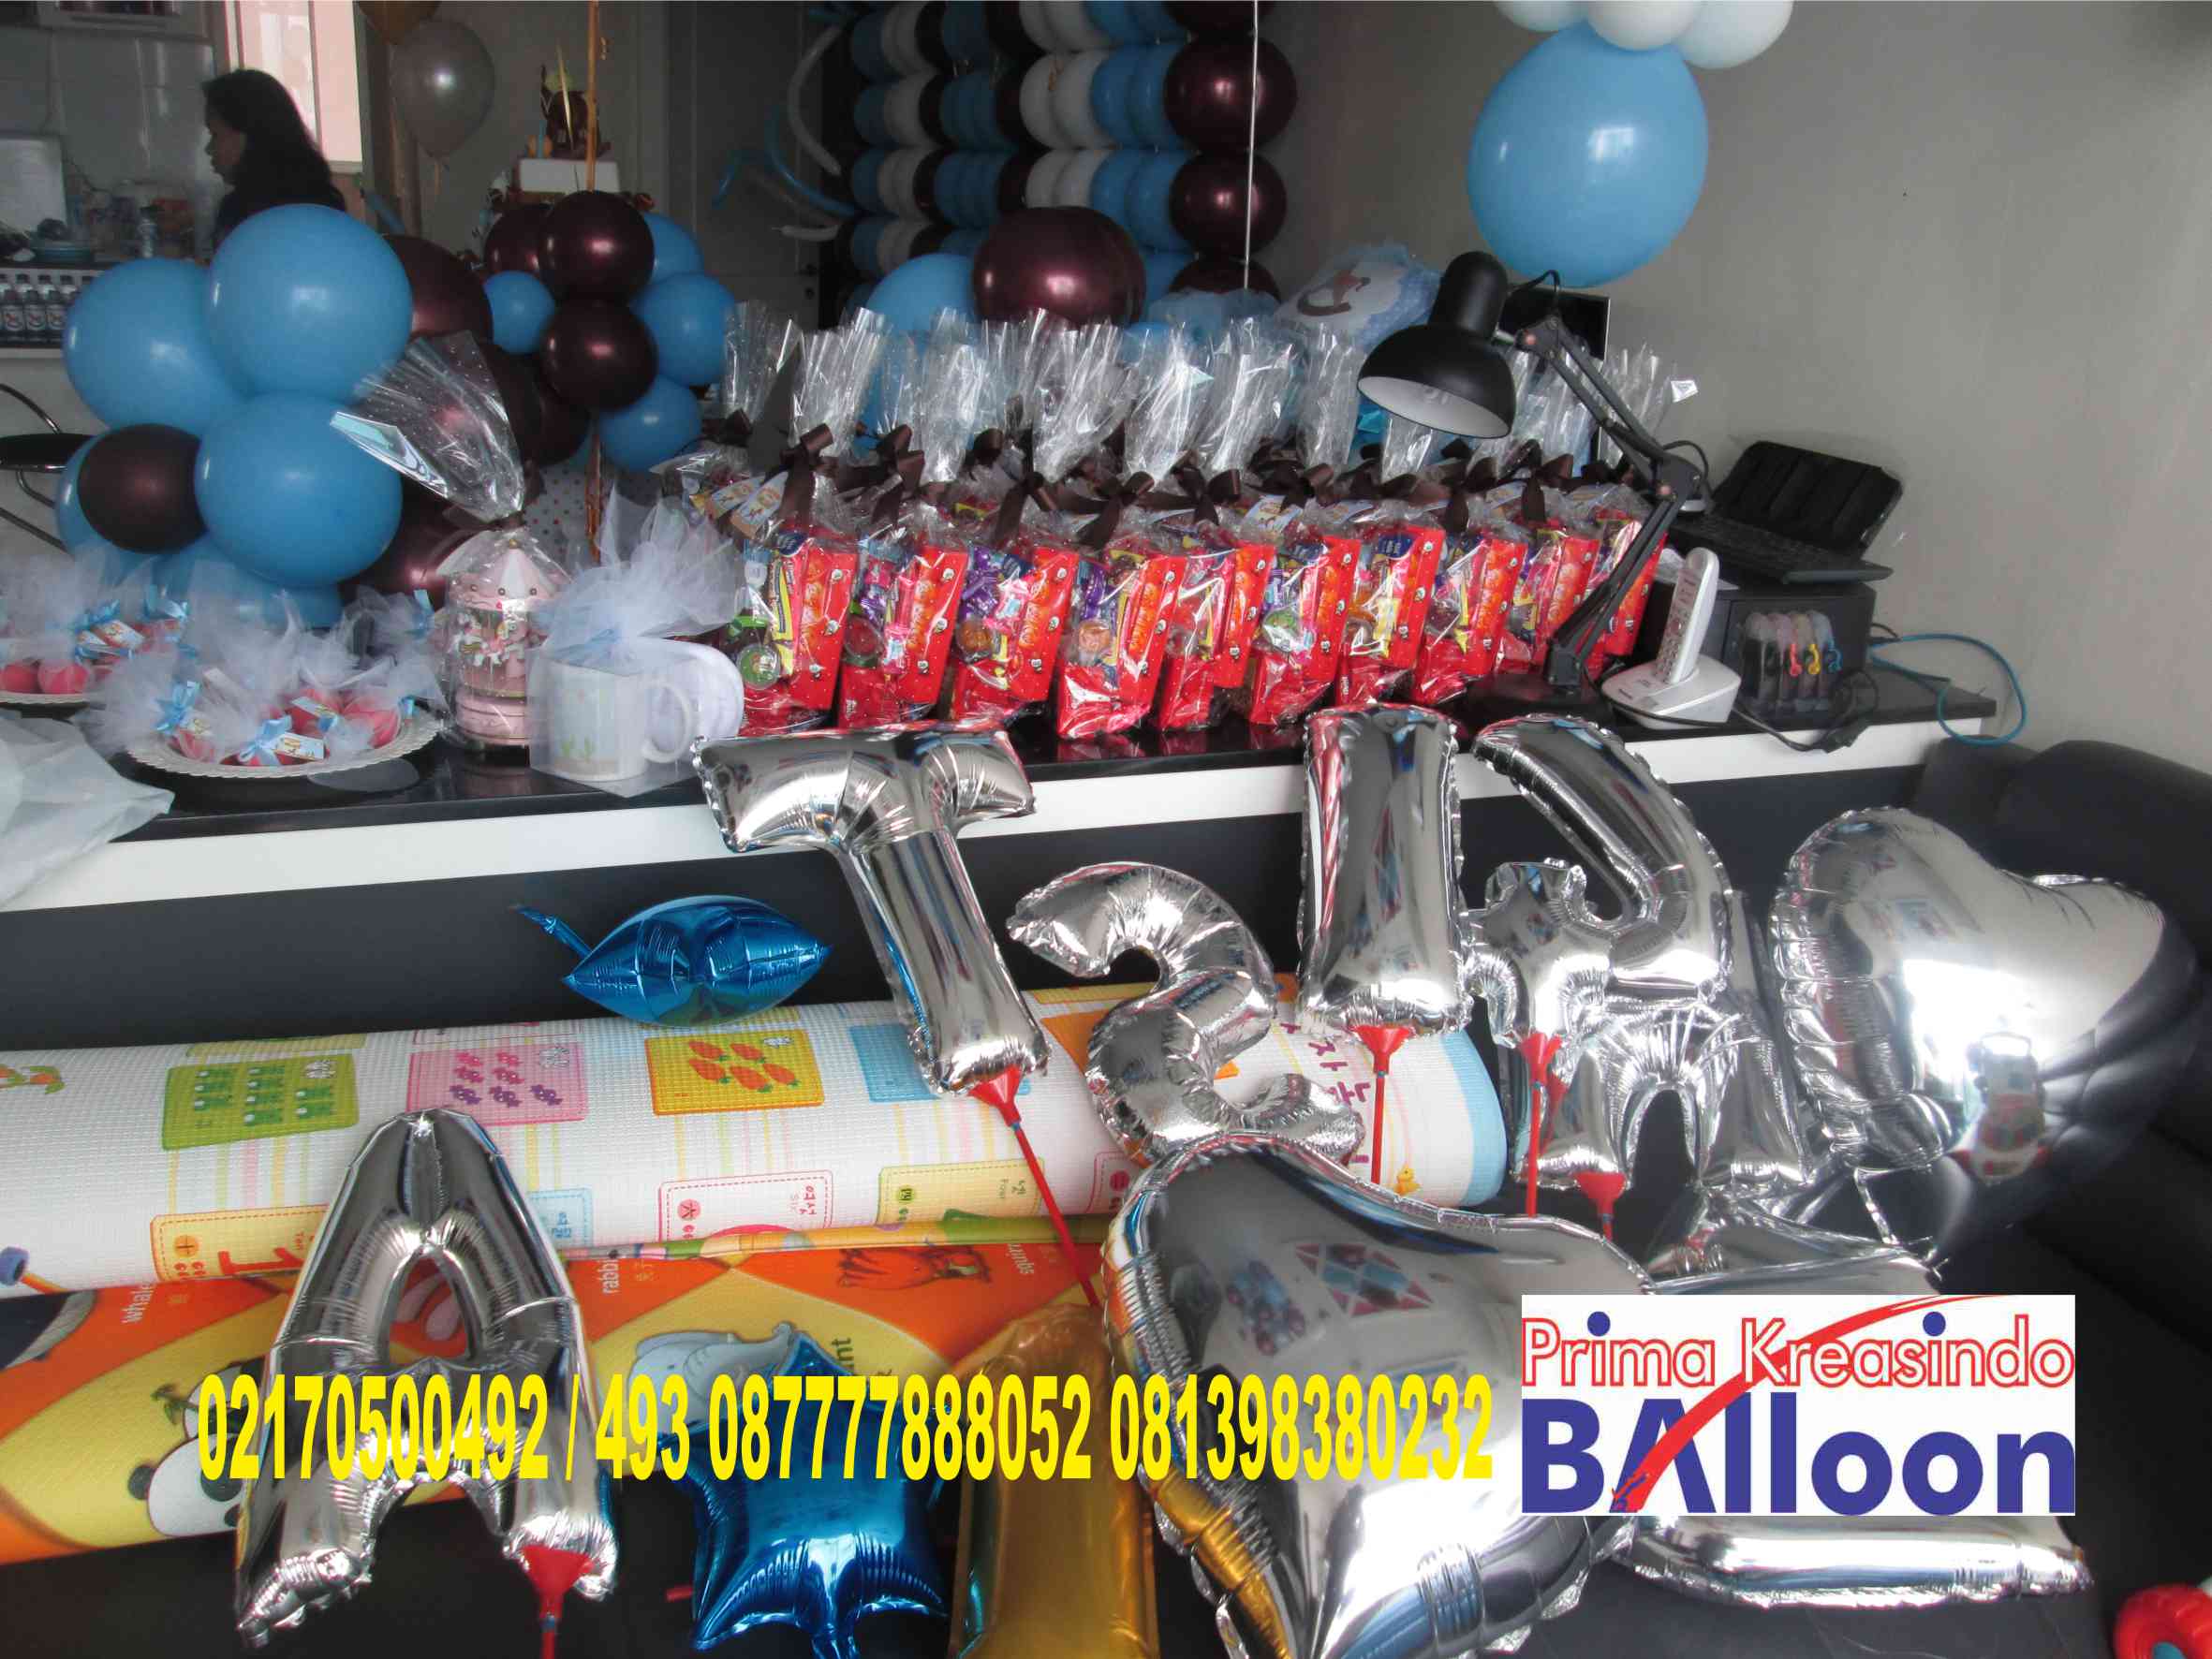  Dekorasi  balon backdrop ulang  tahun  di apartemen ambasador 